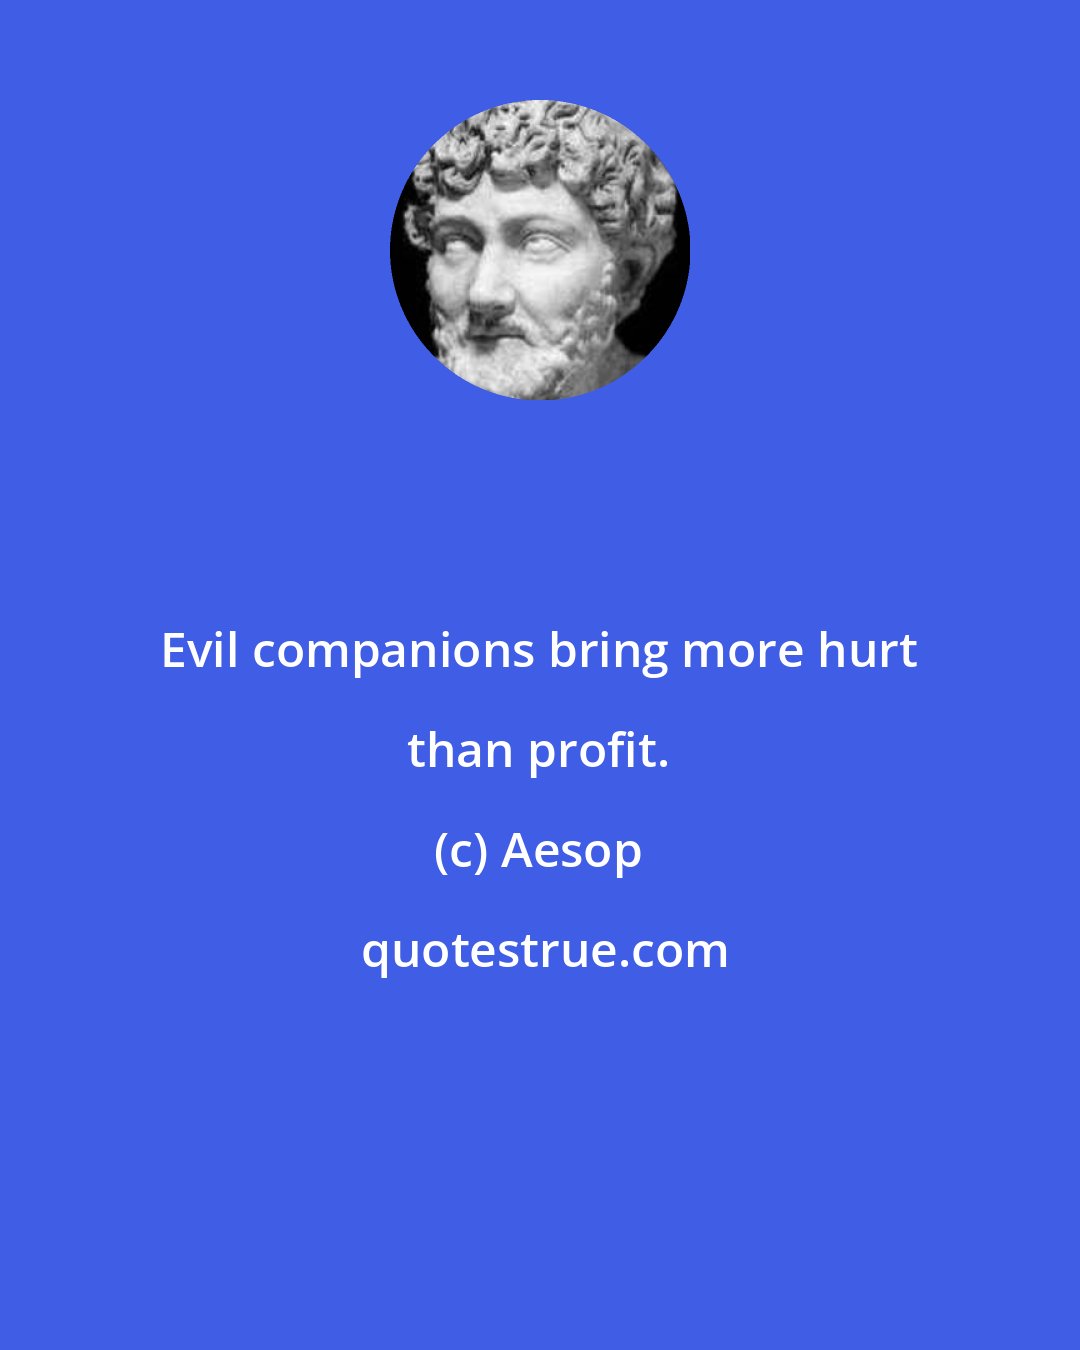 Aesop: Evil companions bring more hurt than profit.